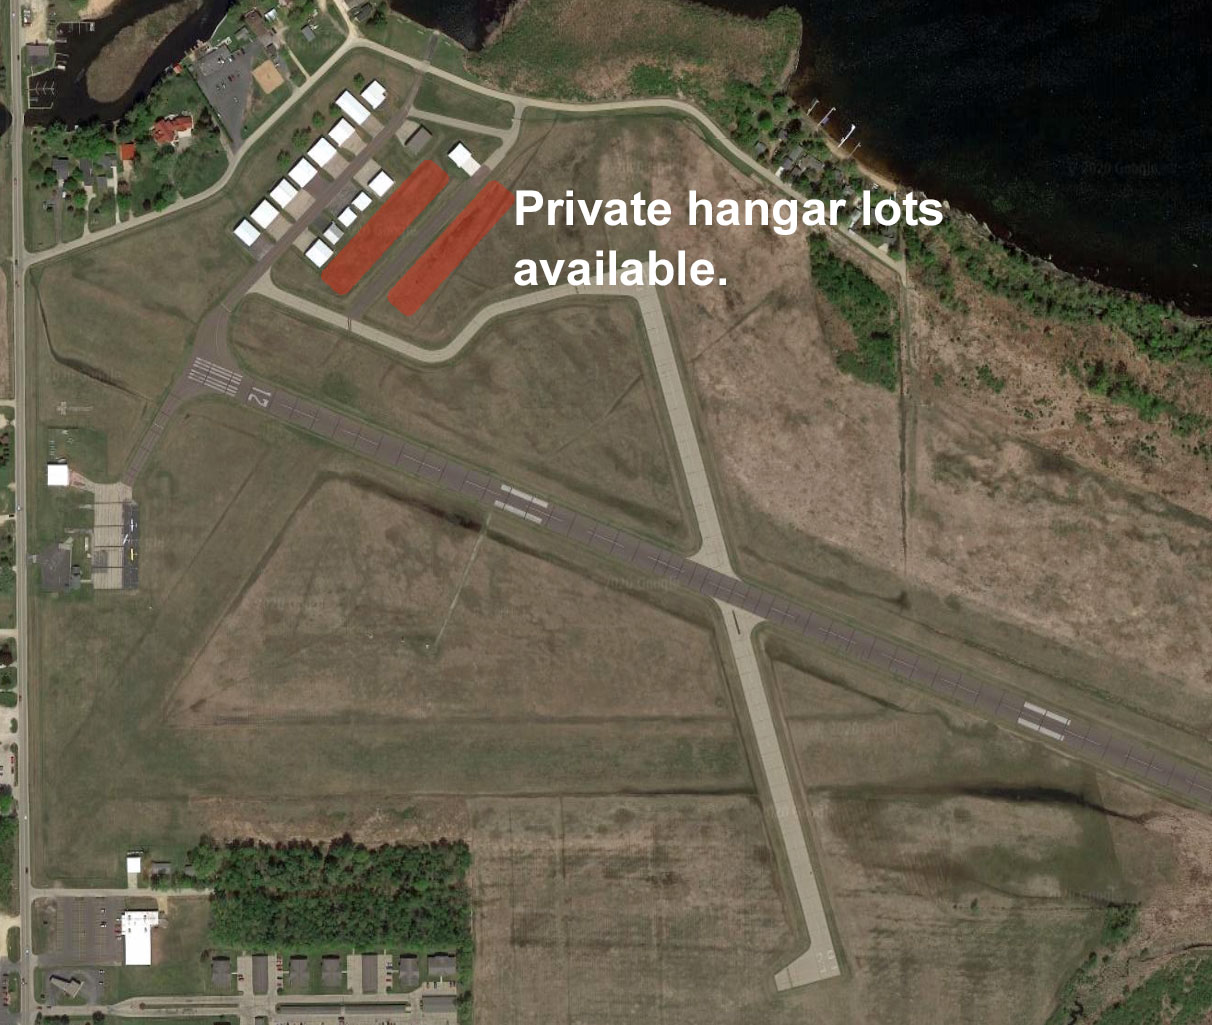 Hangar Lots Available